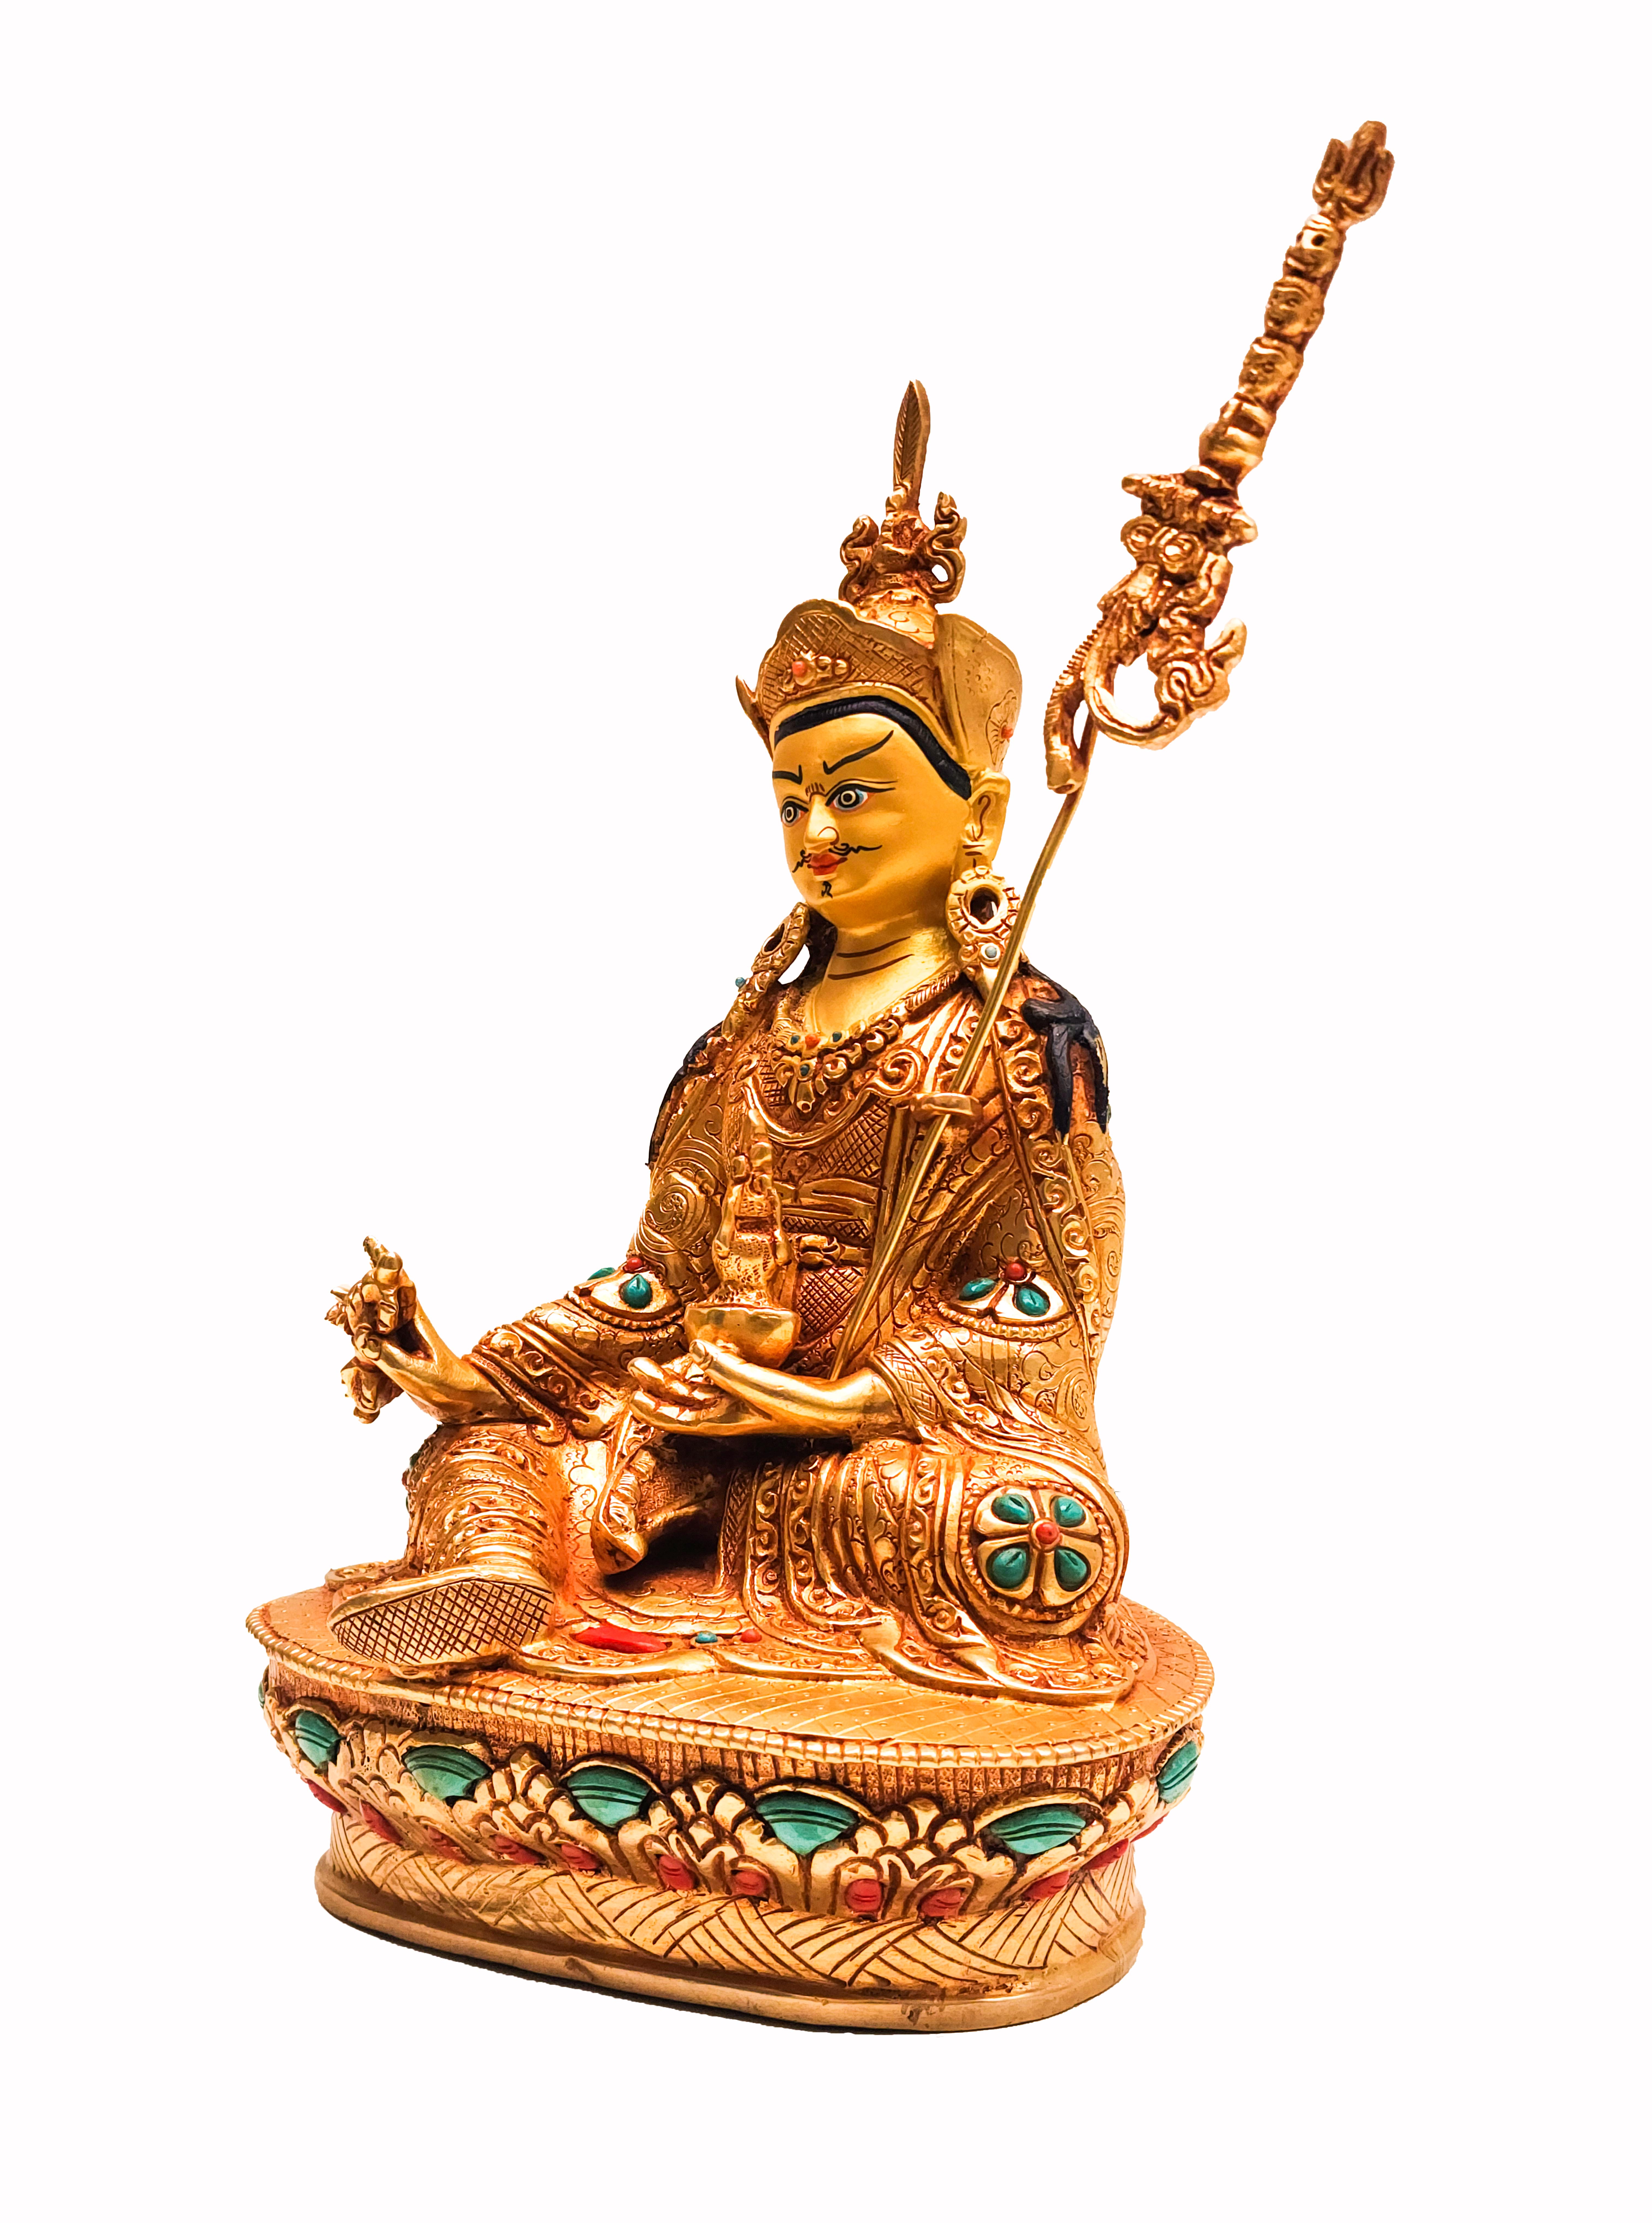 padmasambhava, Budhist Handmade Statue, face Painted And gold Plated, stone Setting